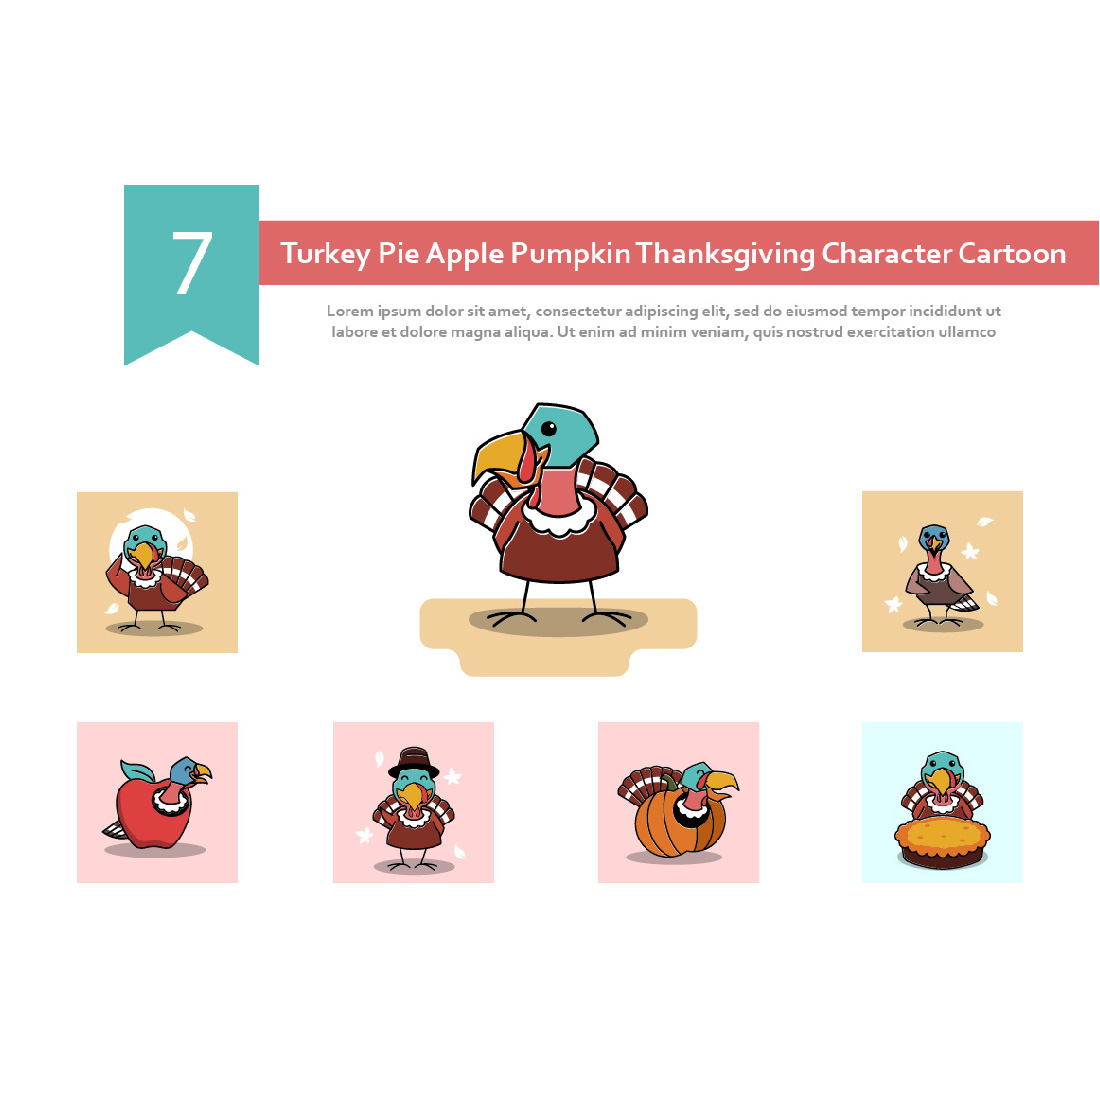 7 Turkey Pie Apple Pumpkin Thanksgiving Character Cartoon cover image.